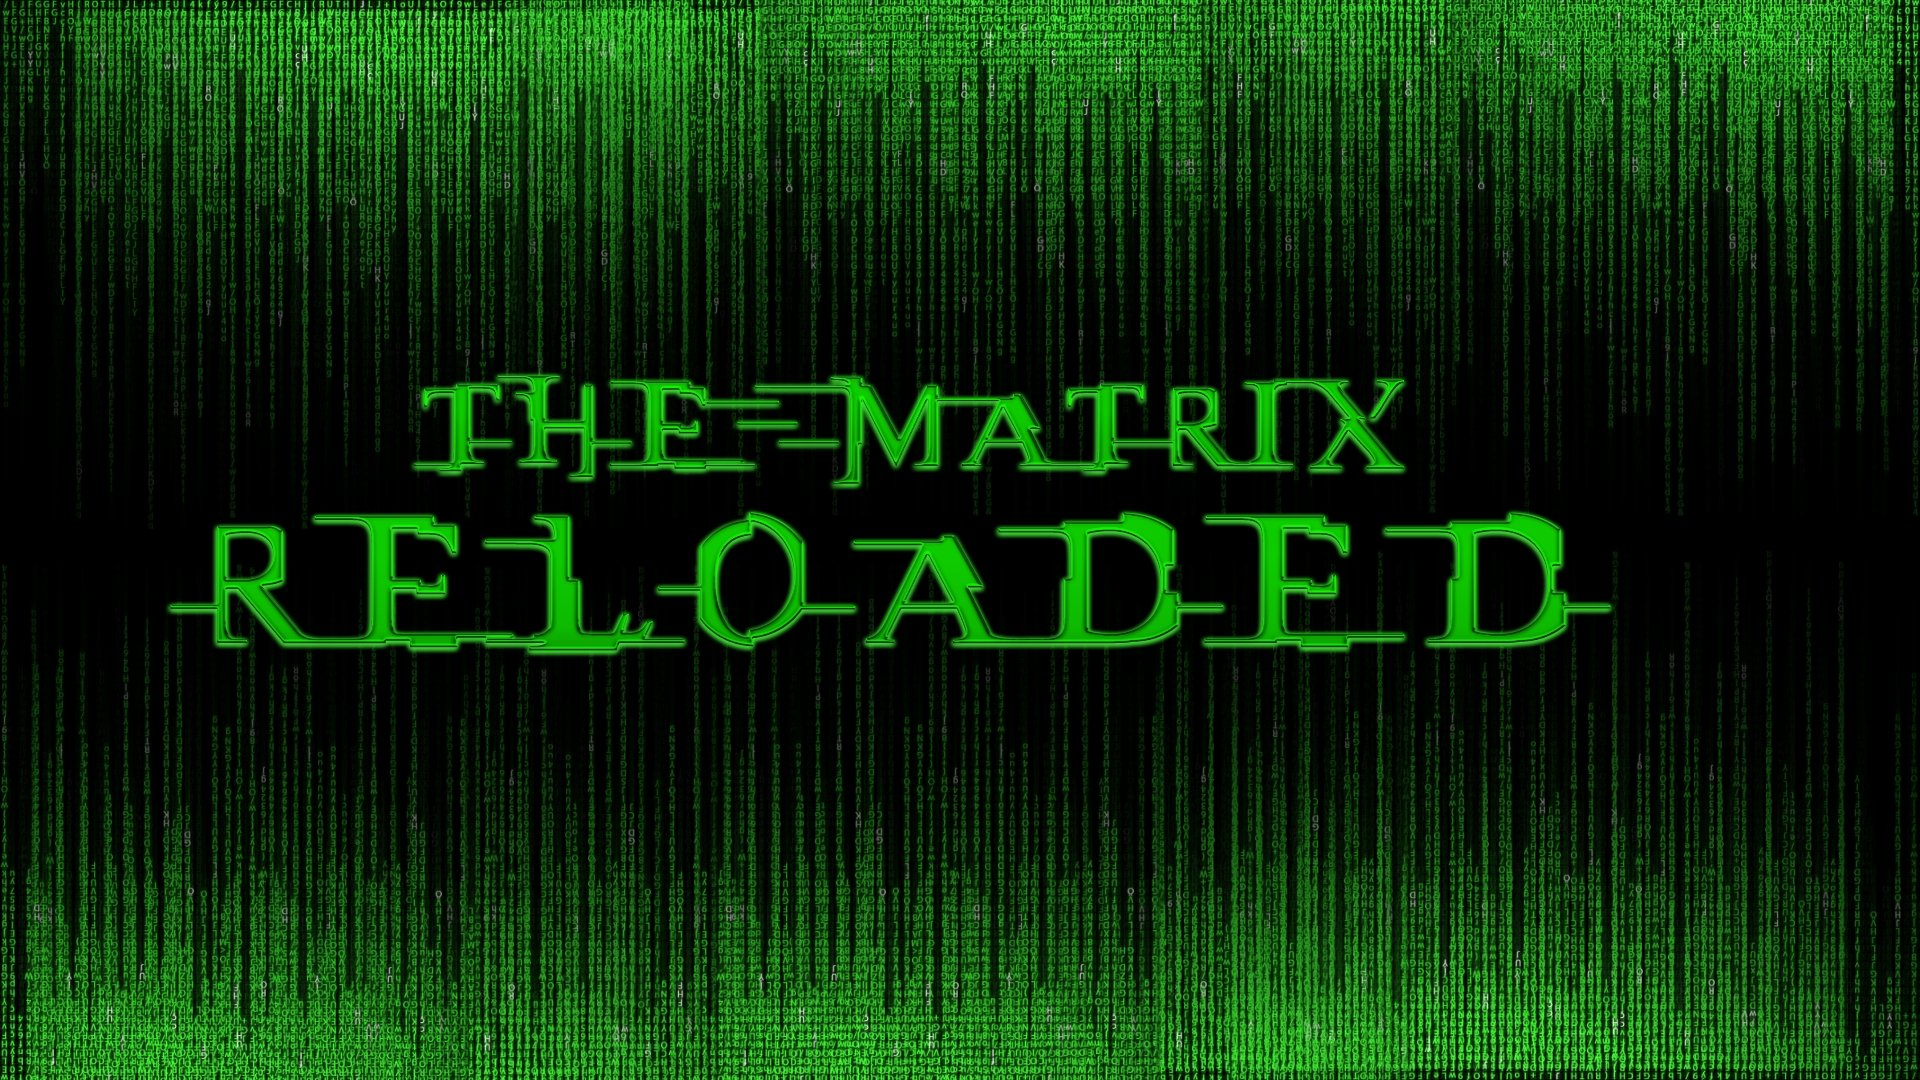 The Matrix Reloaded [LOGO] Wallpaper by LordRadim 1920x1080